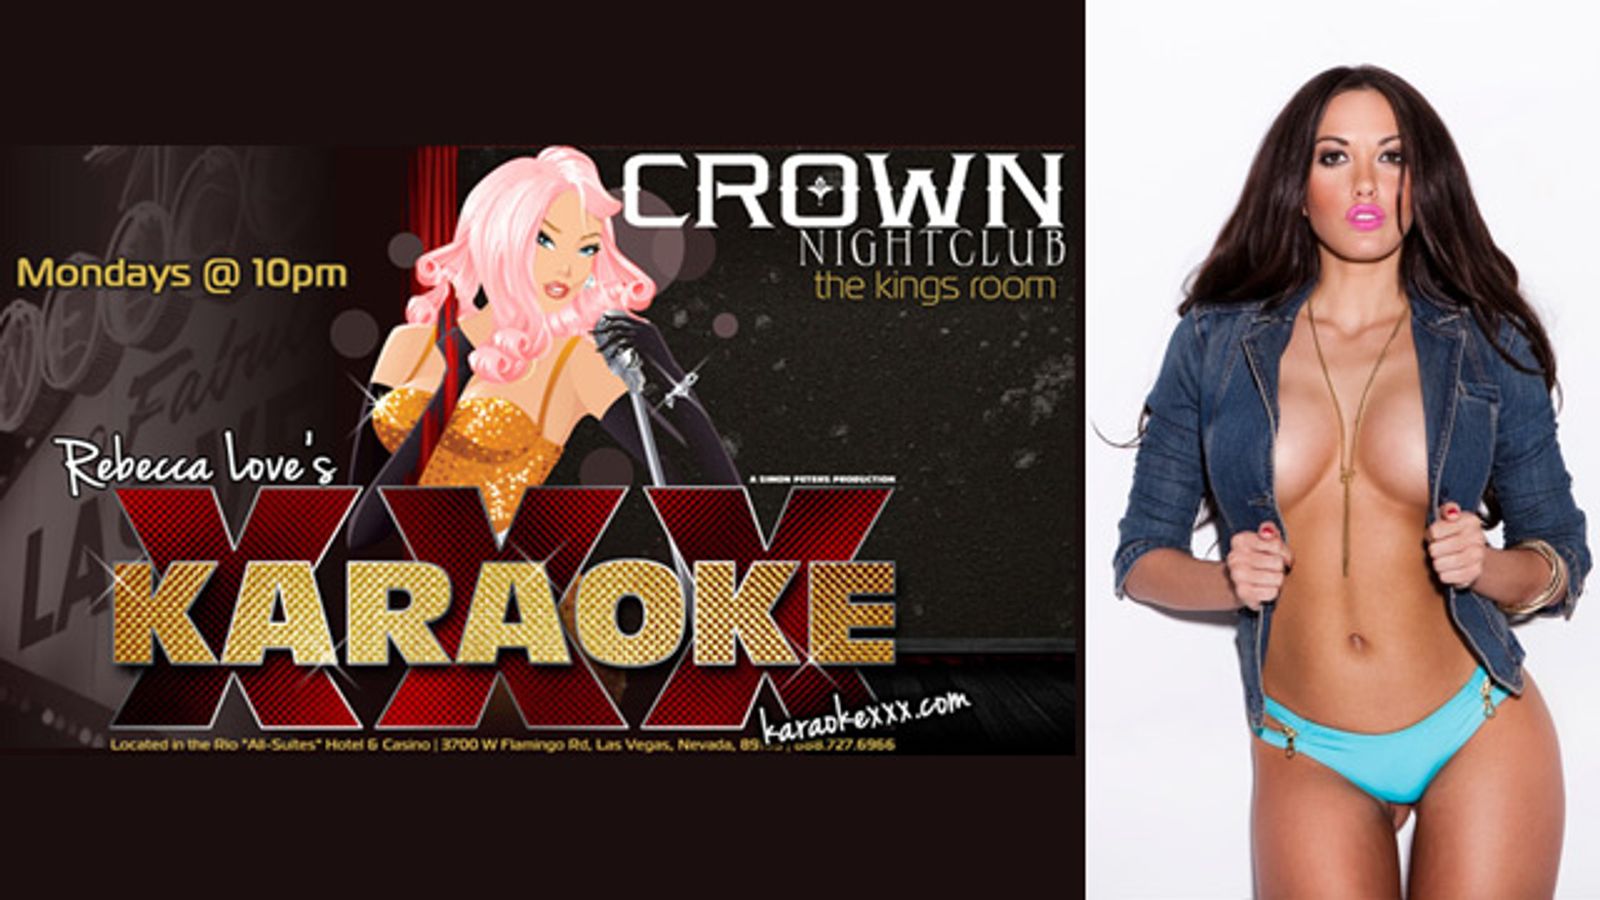 Karaoke XXX Moves to Kings Room at Vegas' Crown Nightclub